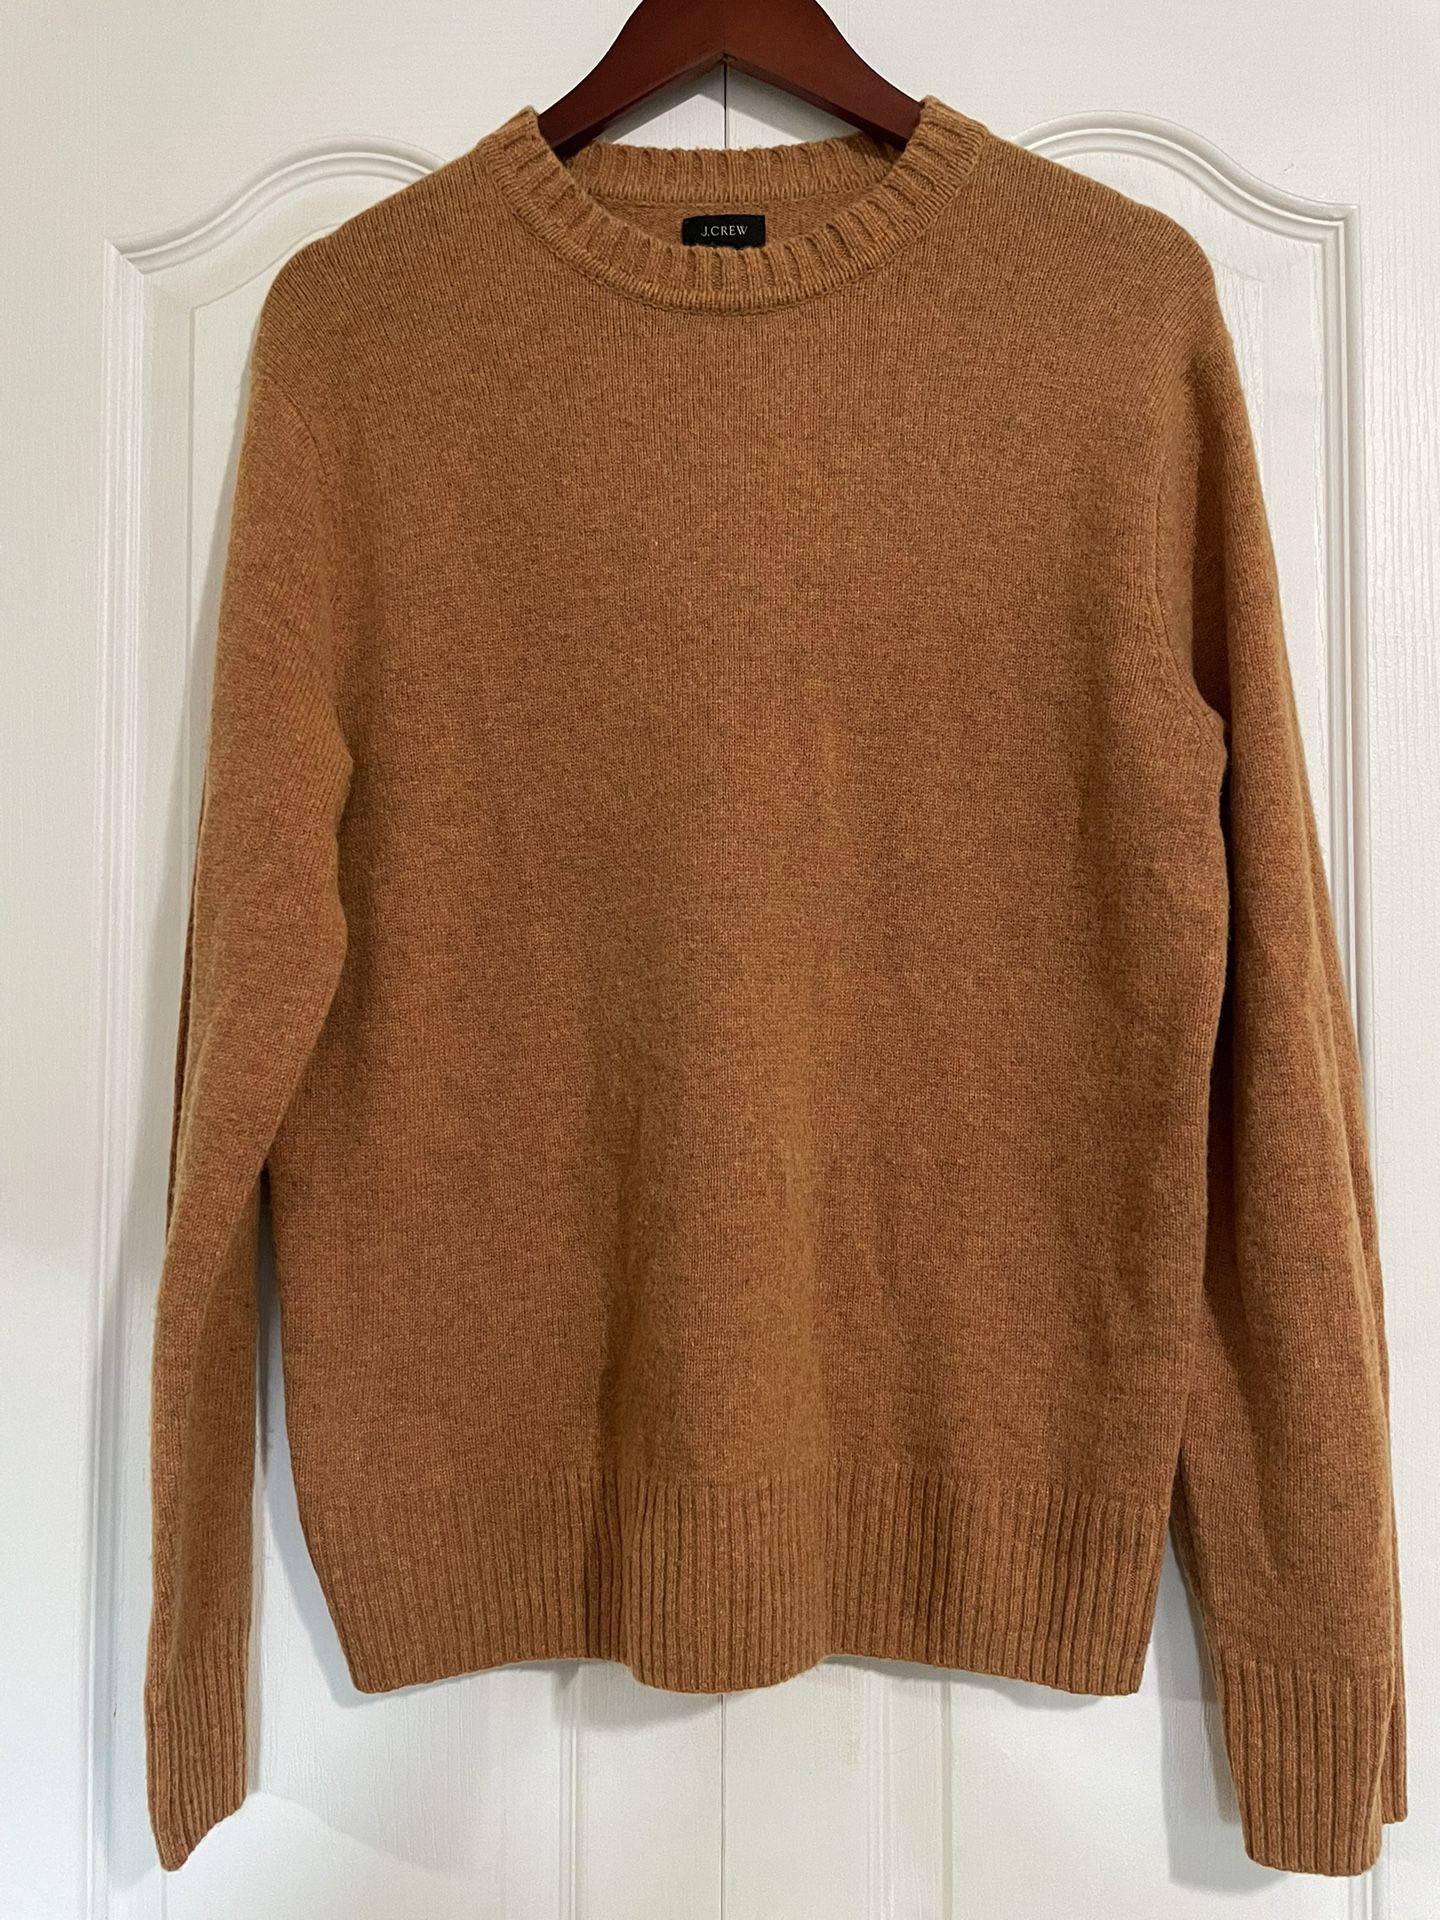 Men’s J. Crew Sweater in Burnt Orange